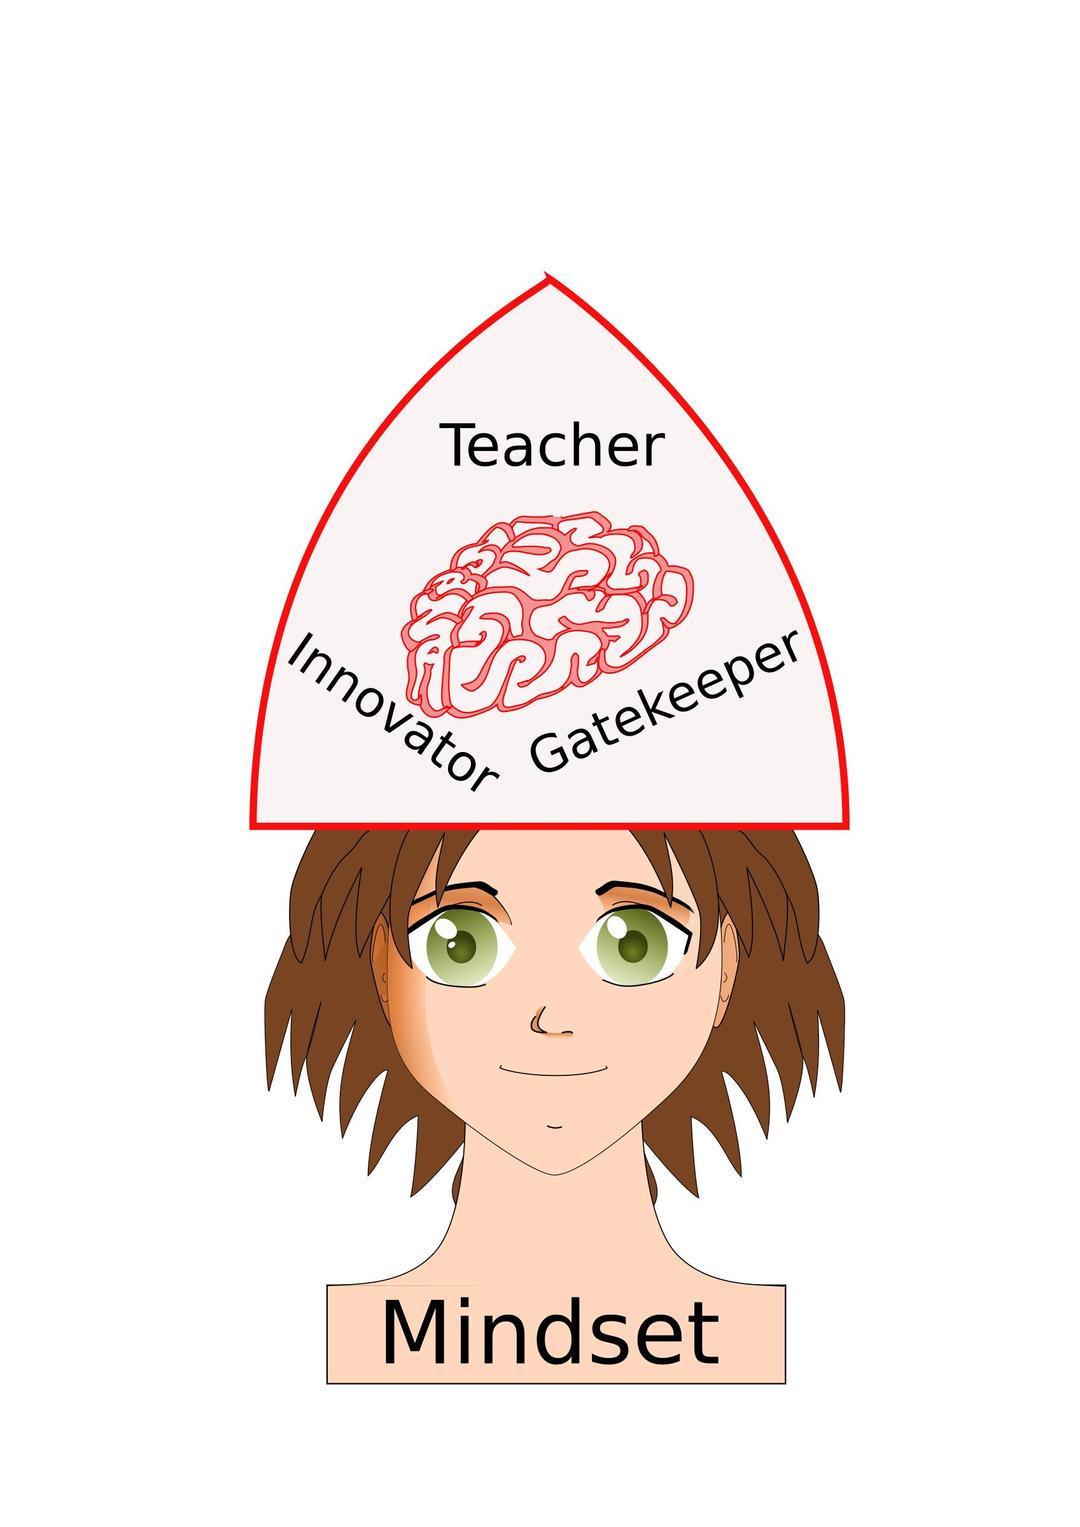 Teacher Mindset - Innovator Gatekeeper png transparent